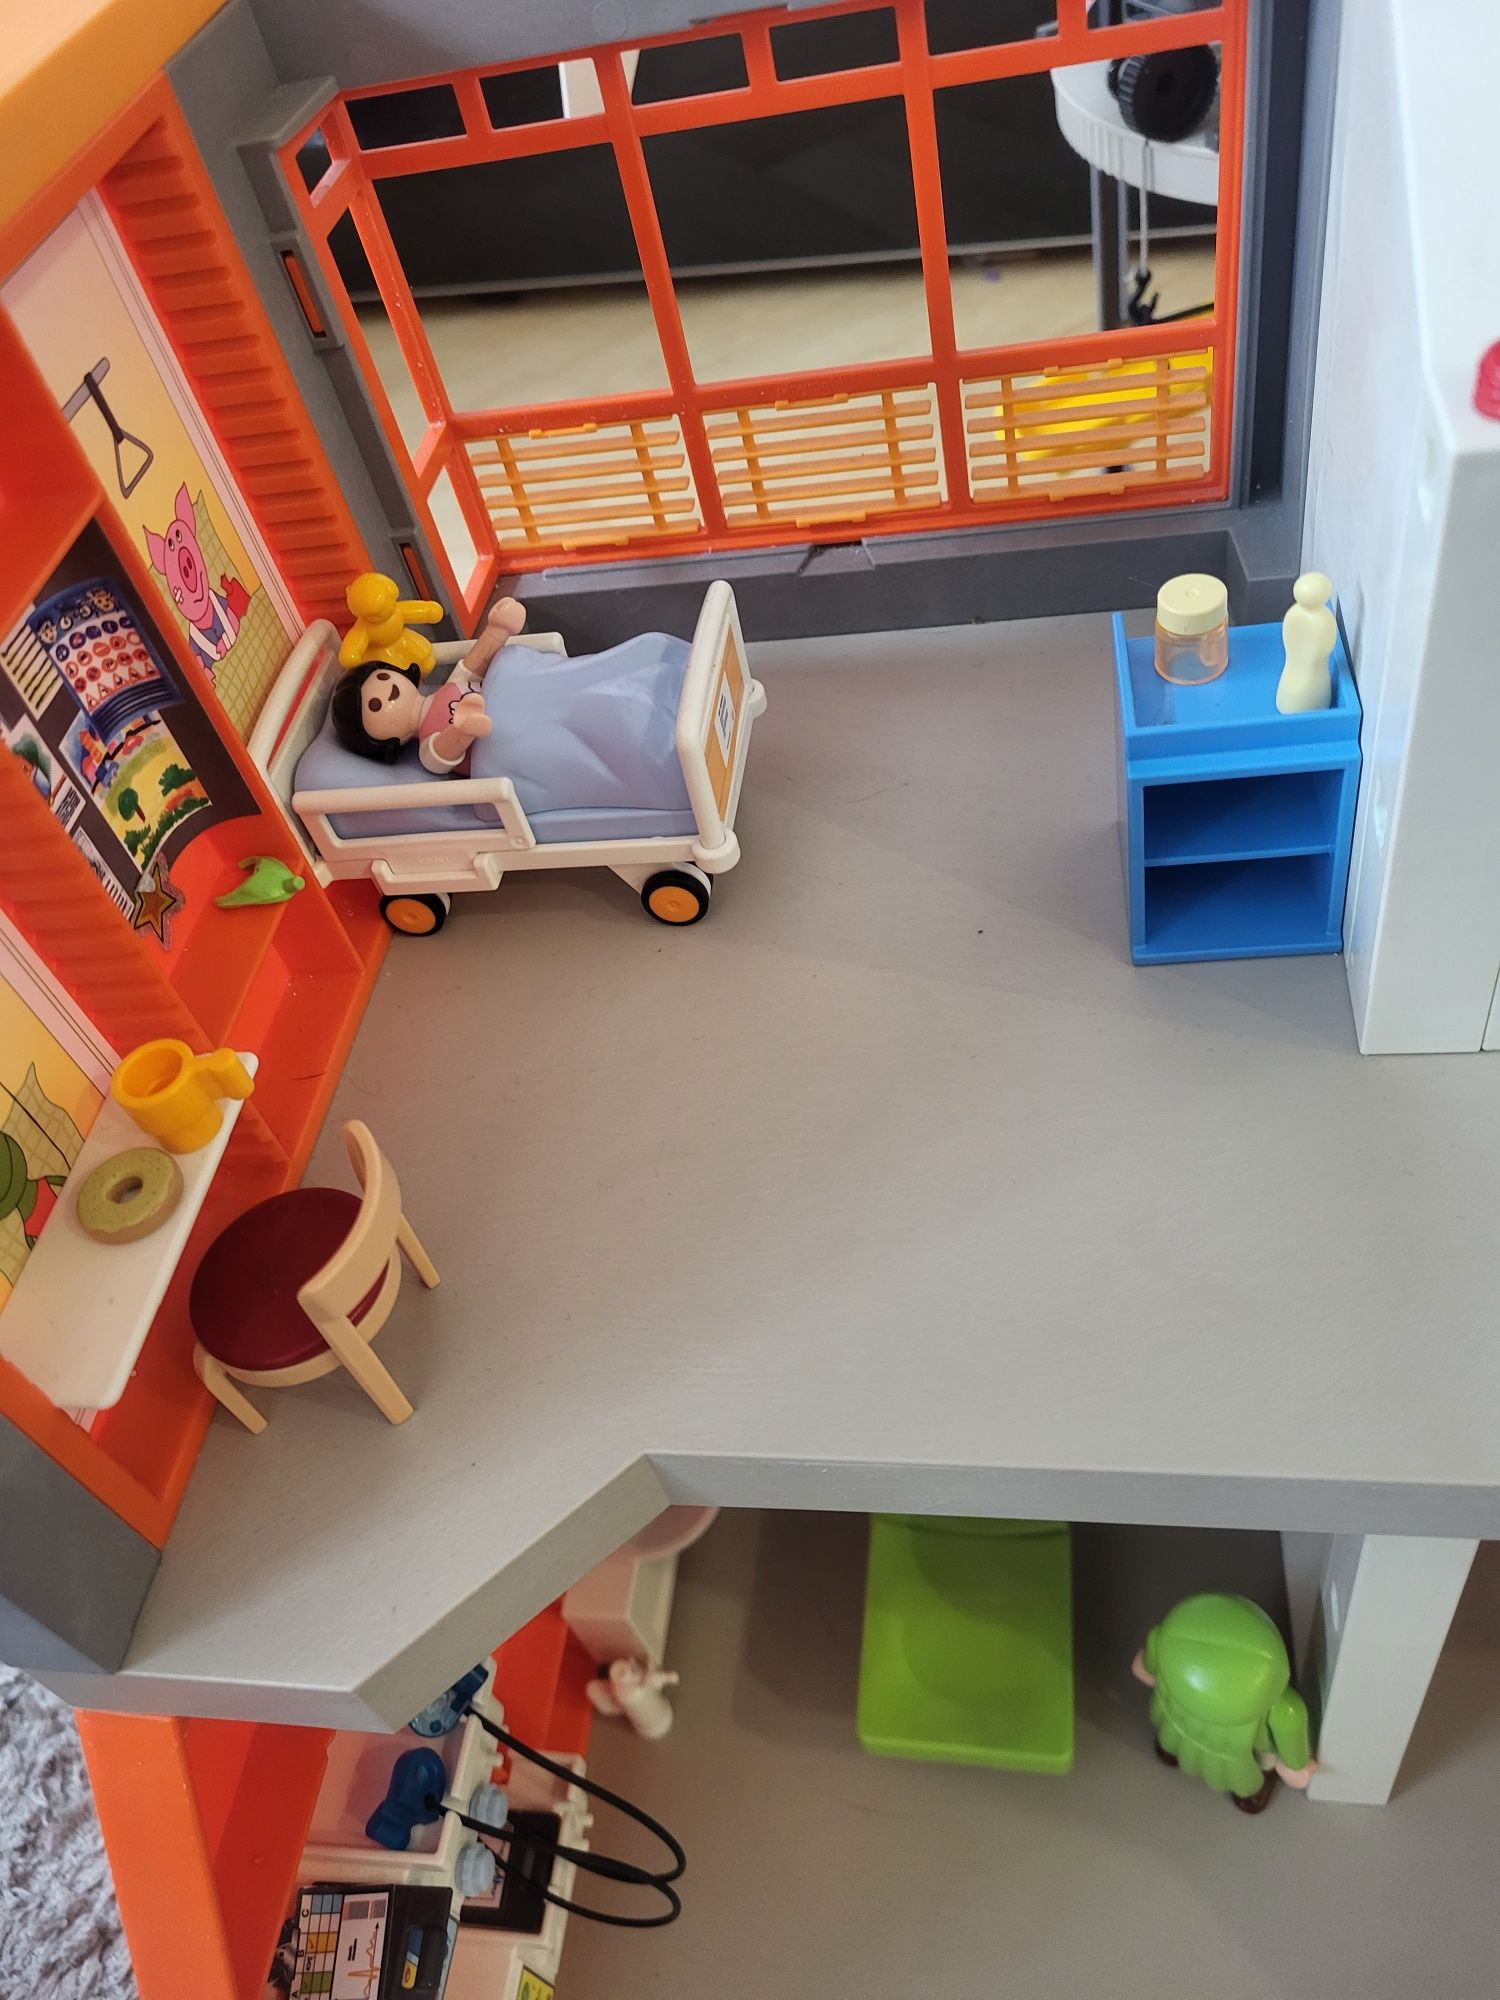 Playmobil szpital + helikopter górski + lotnisko